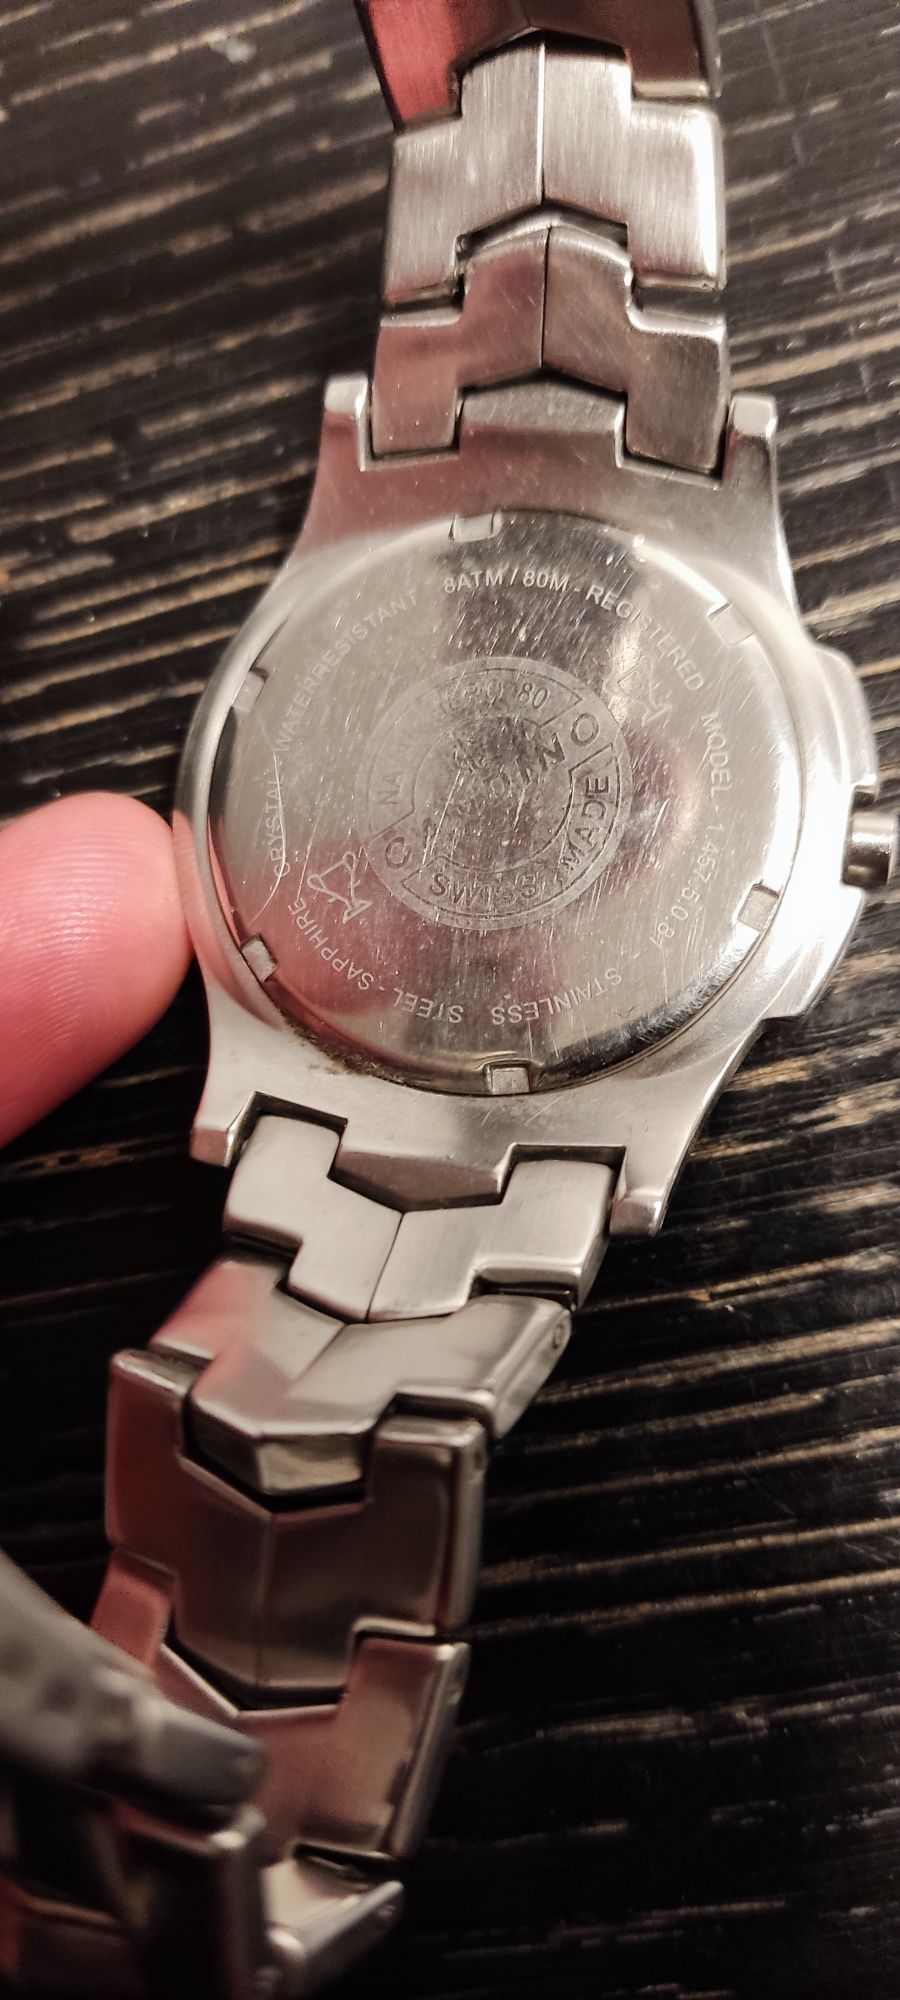 Zegarek Candino srebrny bransoleta